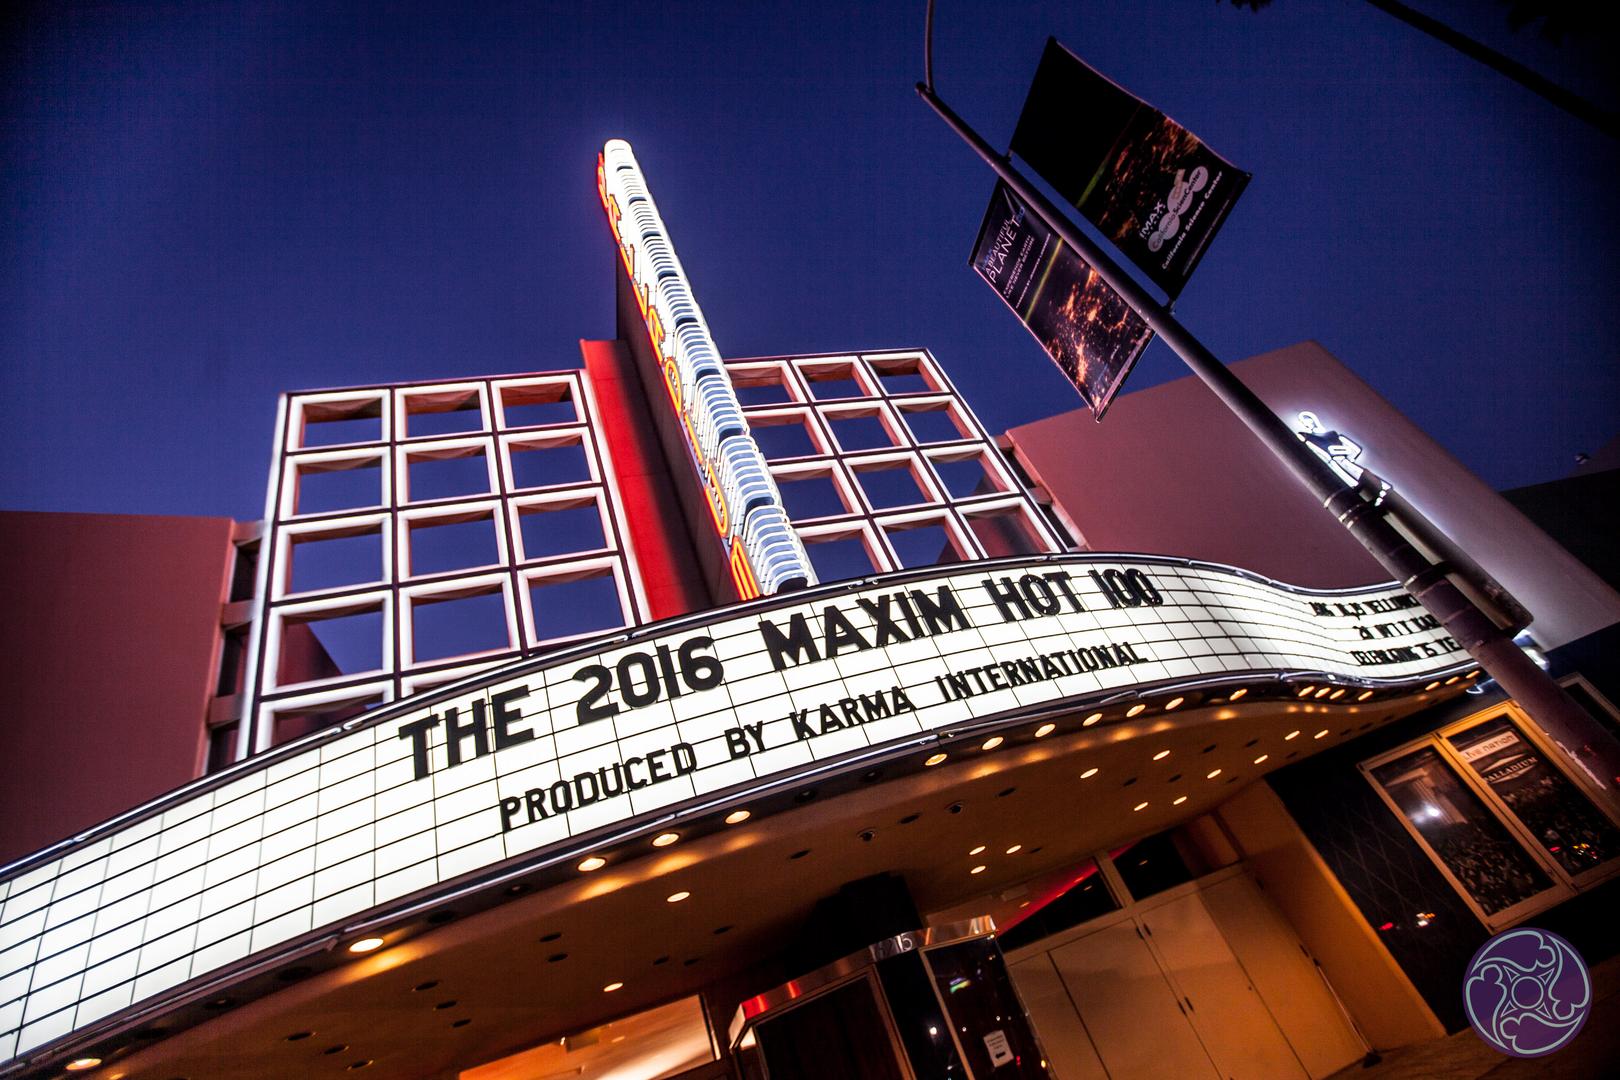 The Hollywood Palladium hosts the 2016 Maxim Hot 100 Party